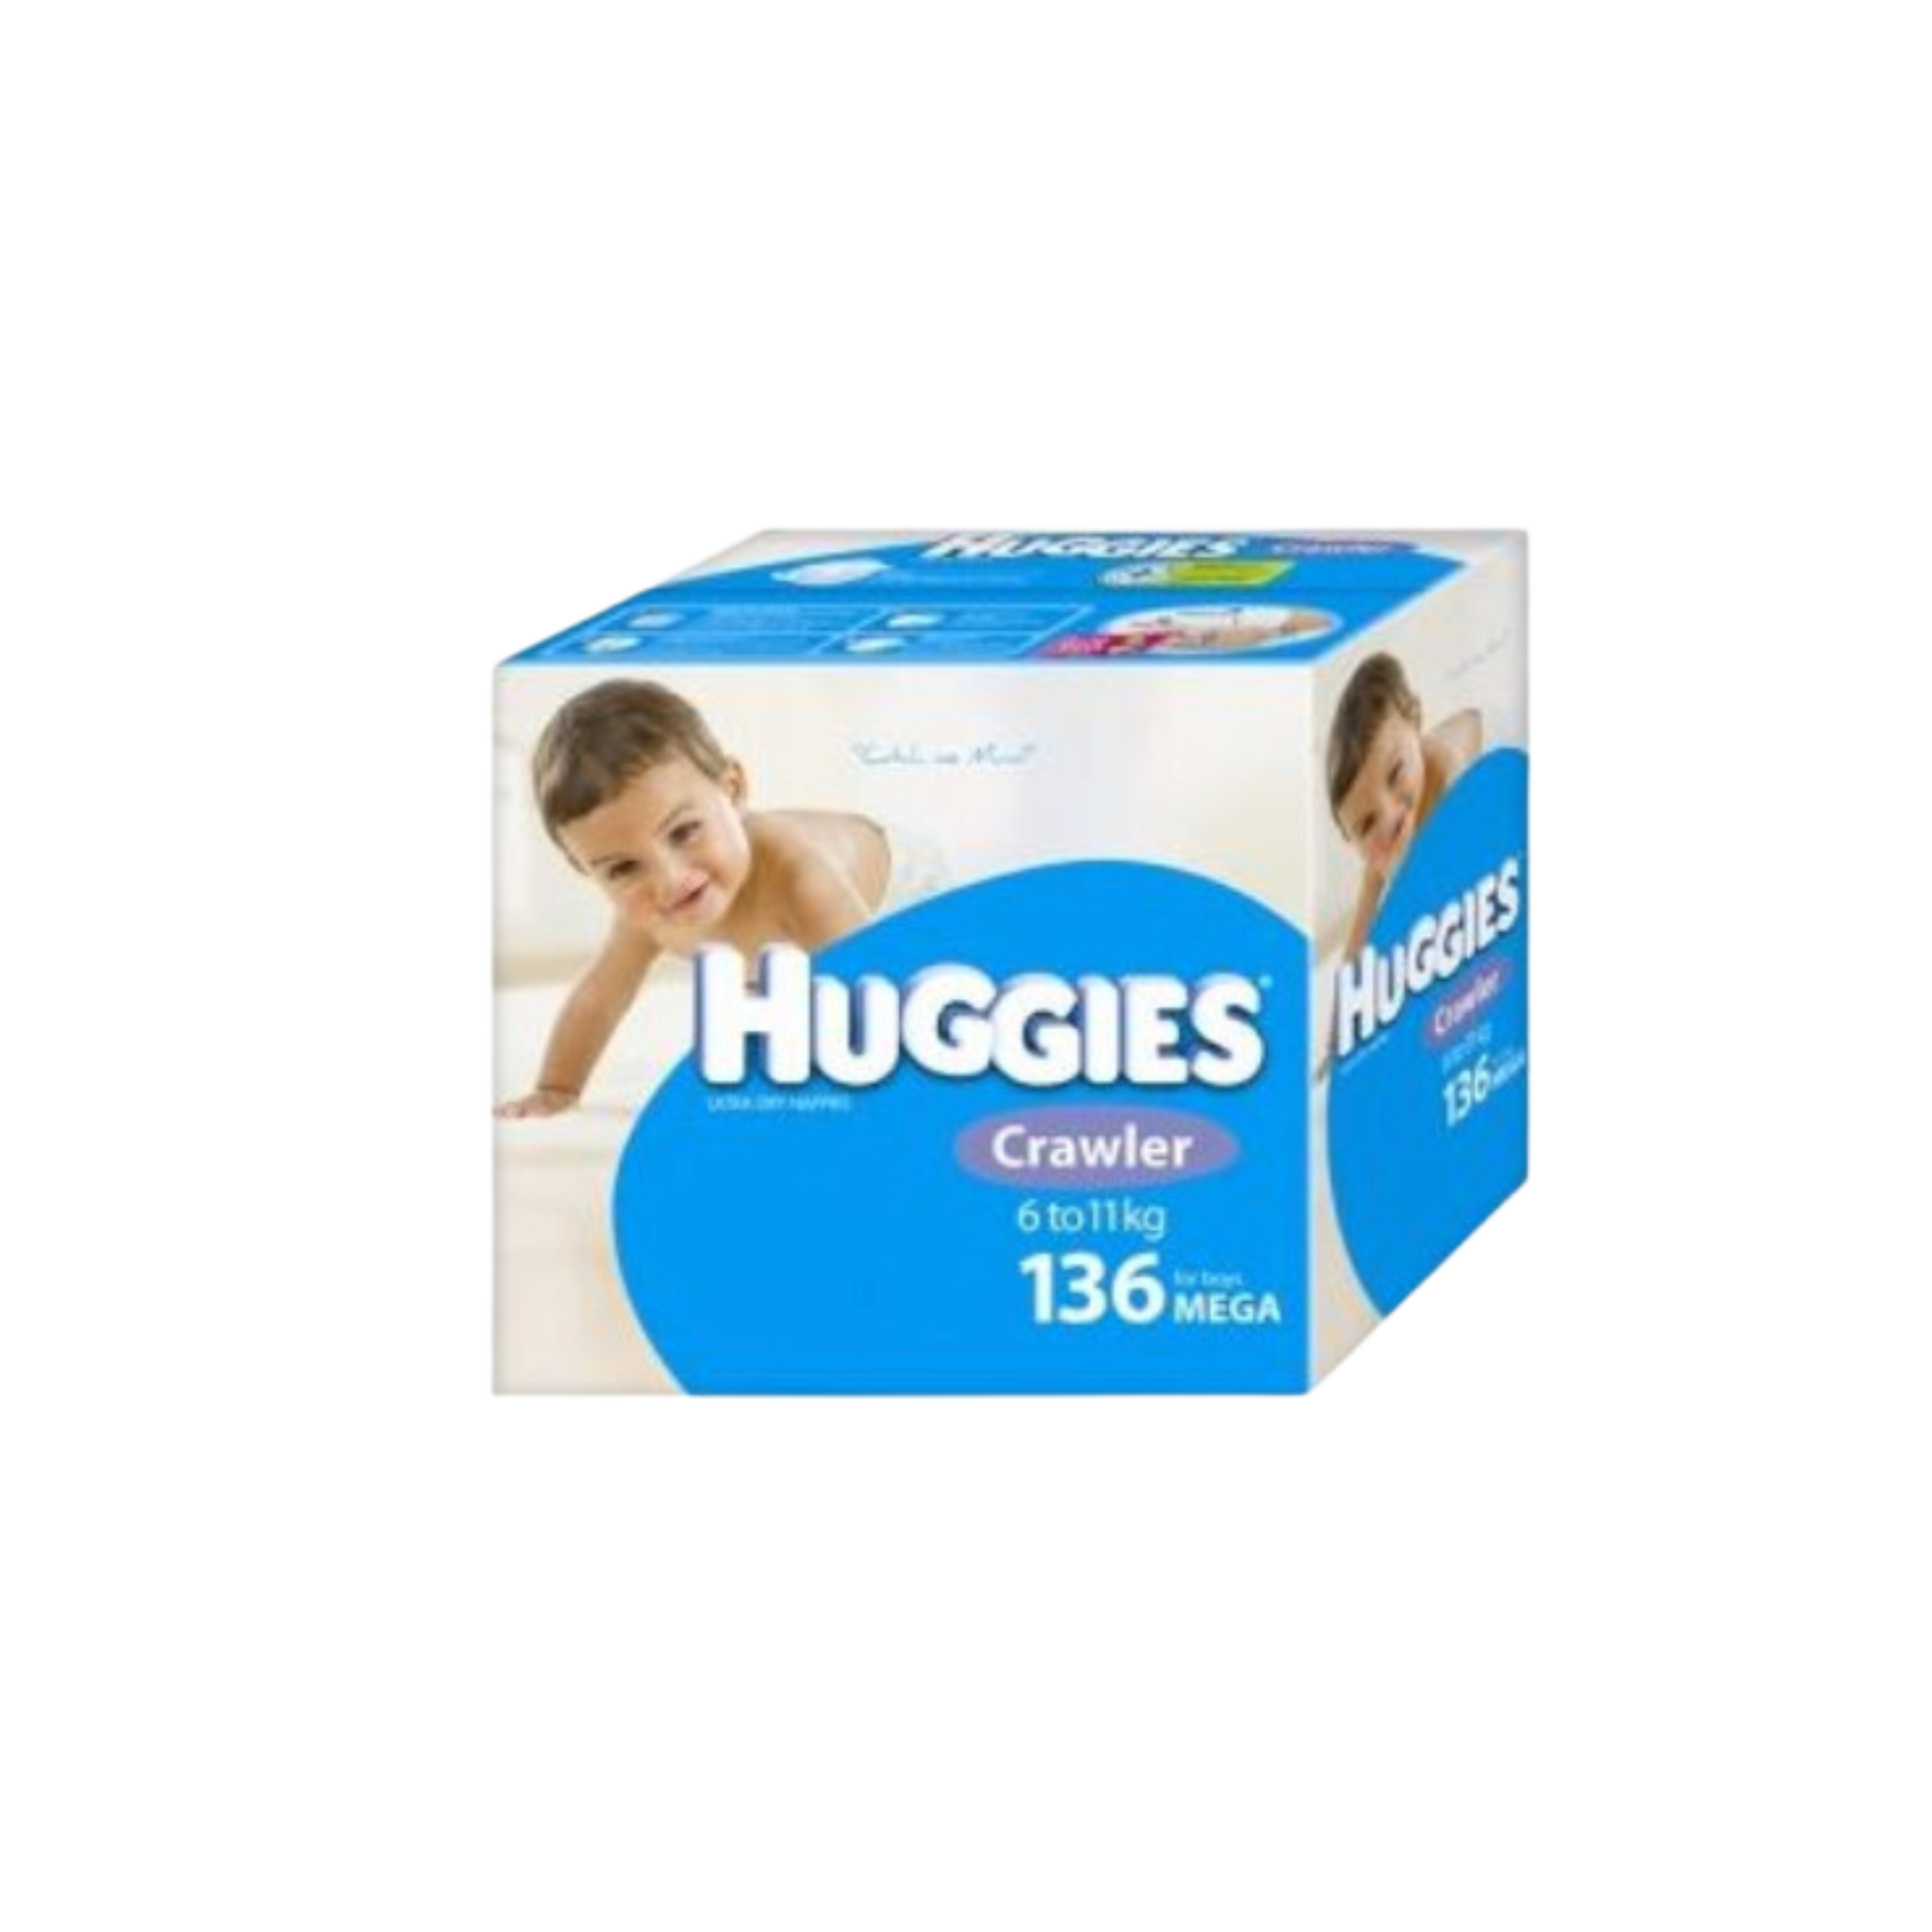 Huggies Crawler Boy - Box of 136's